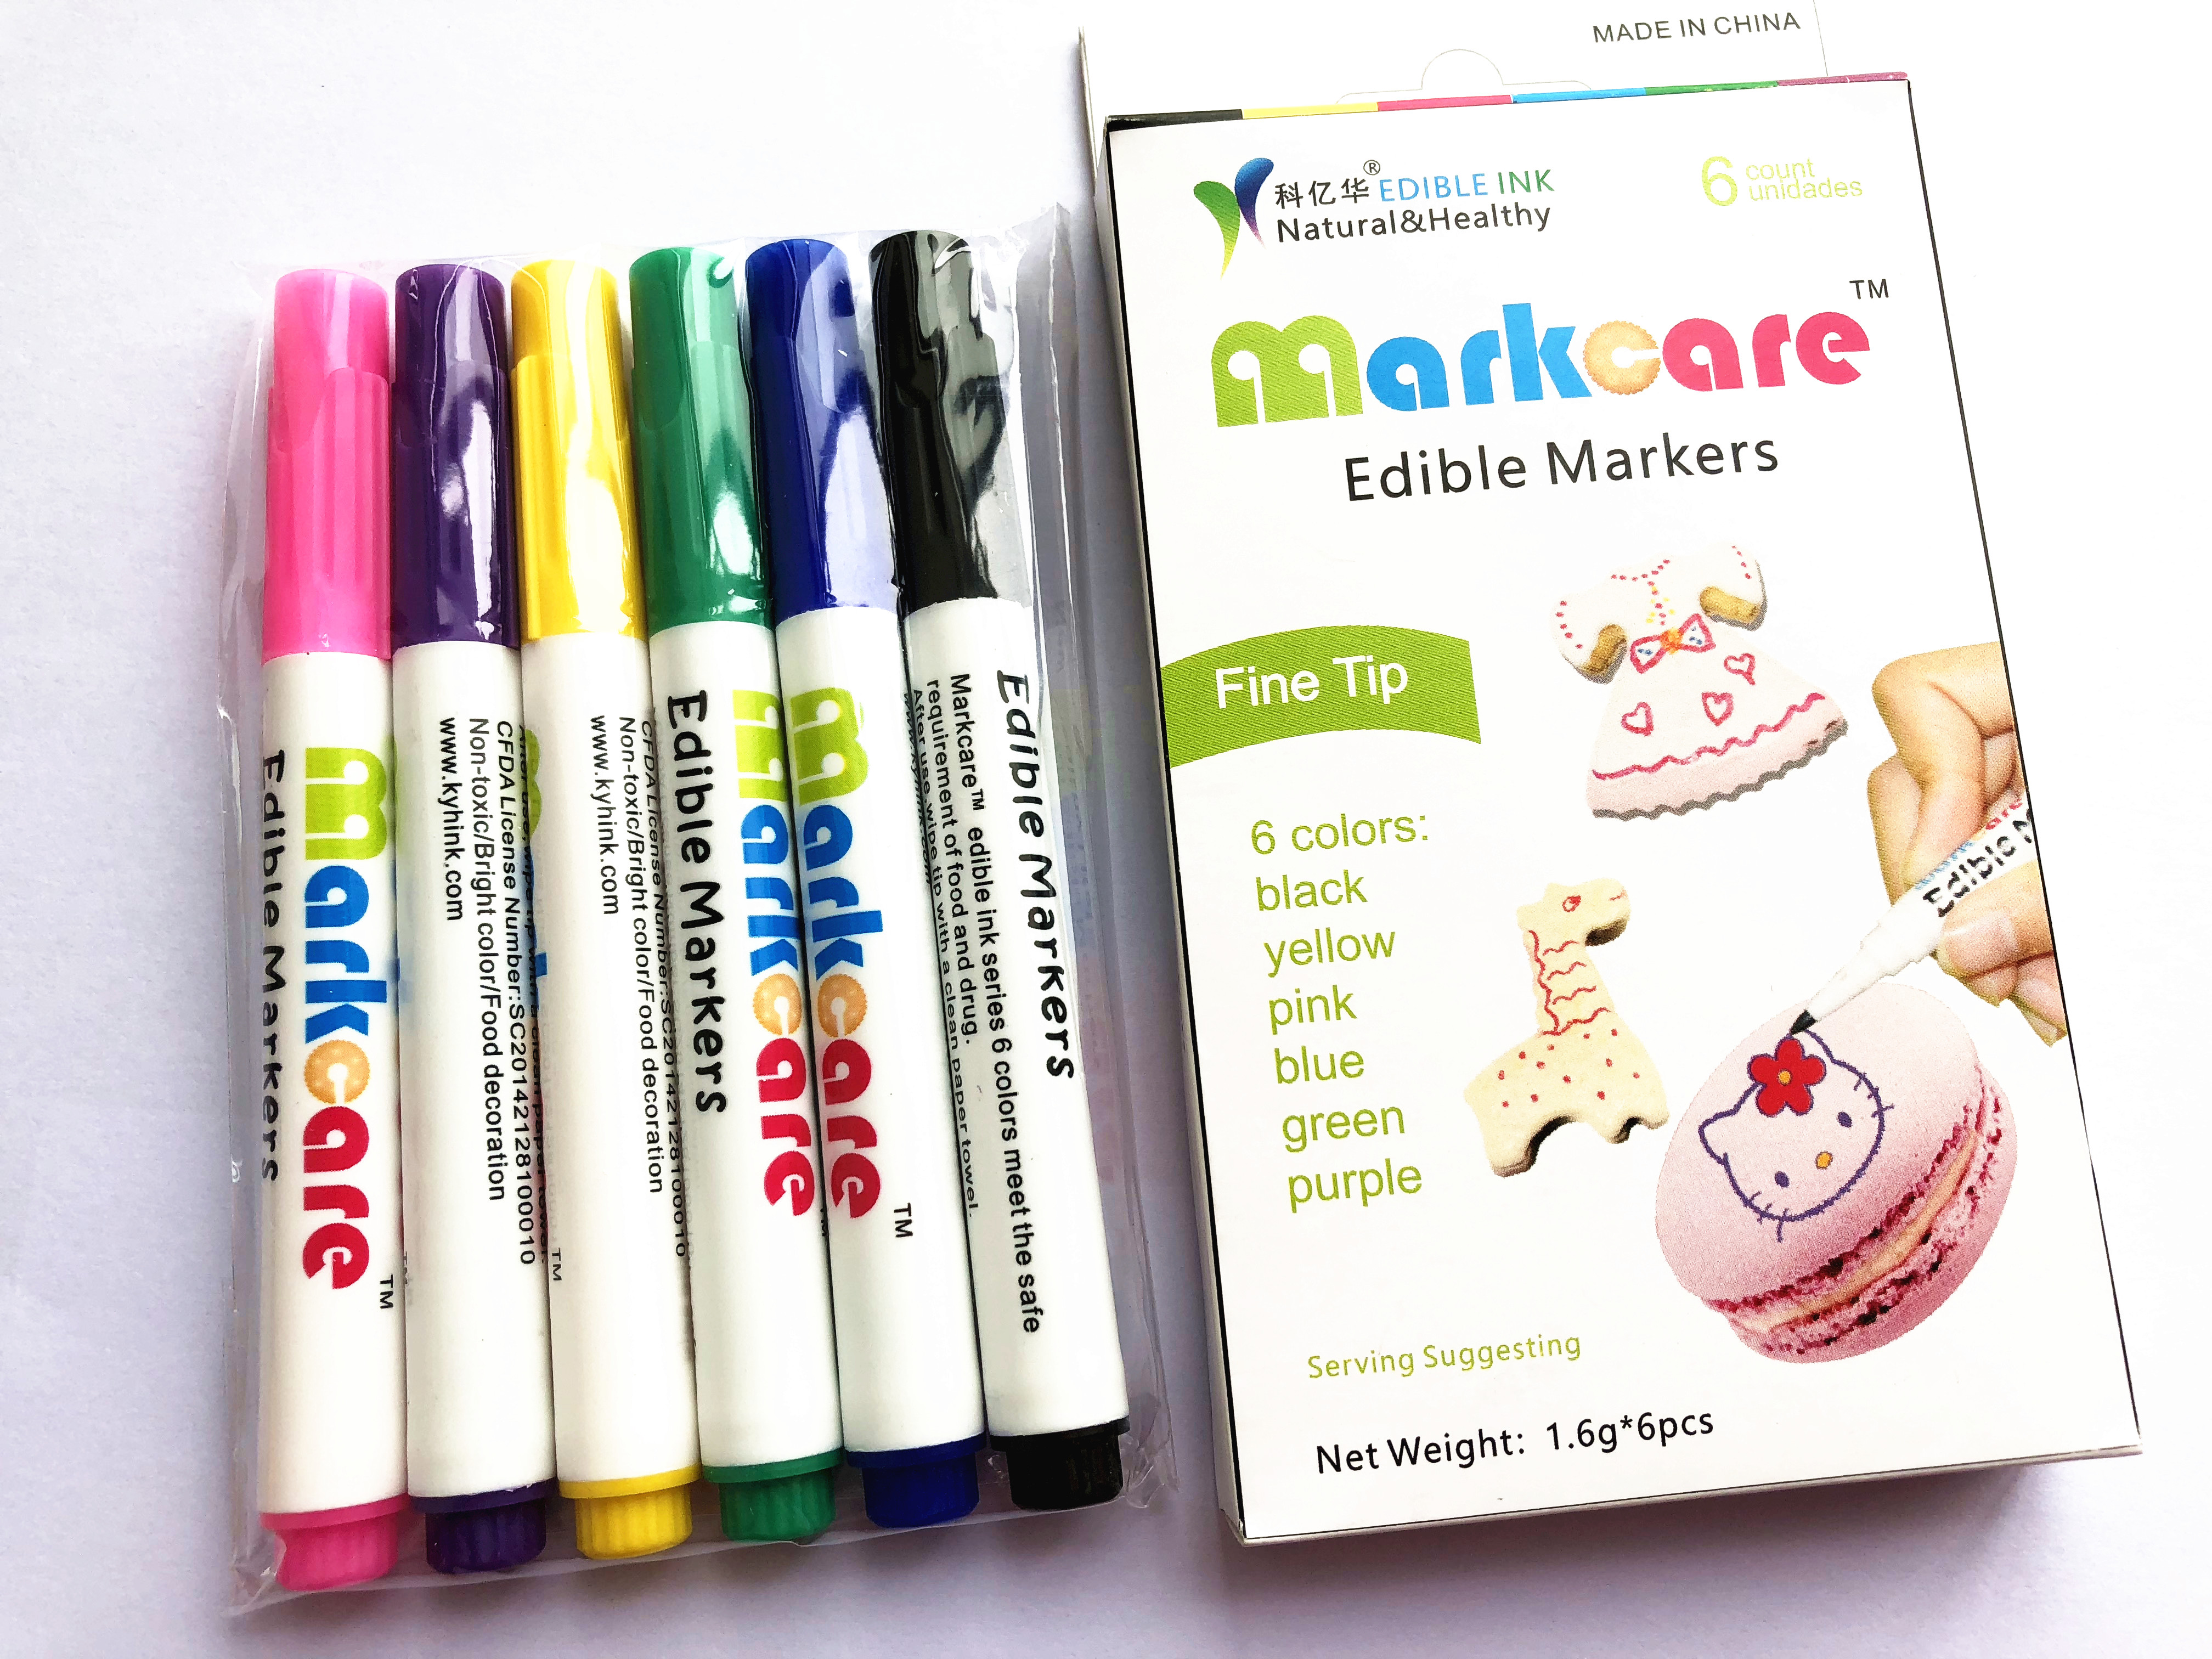 Markcare: Magic of The Pen